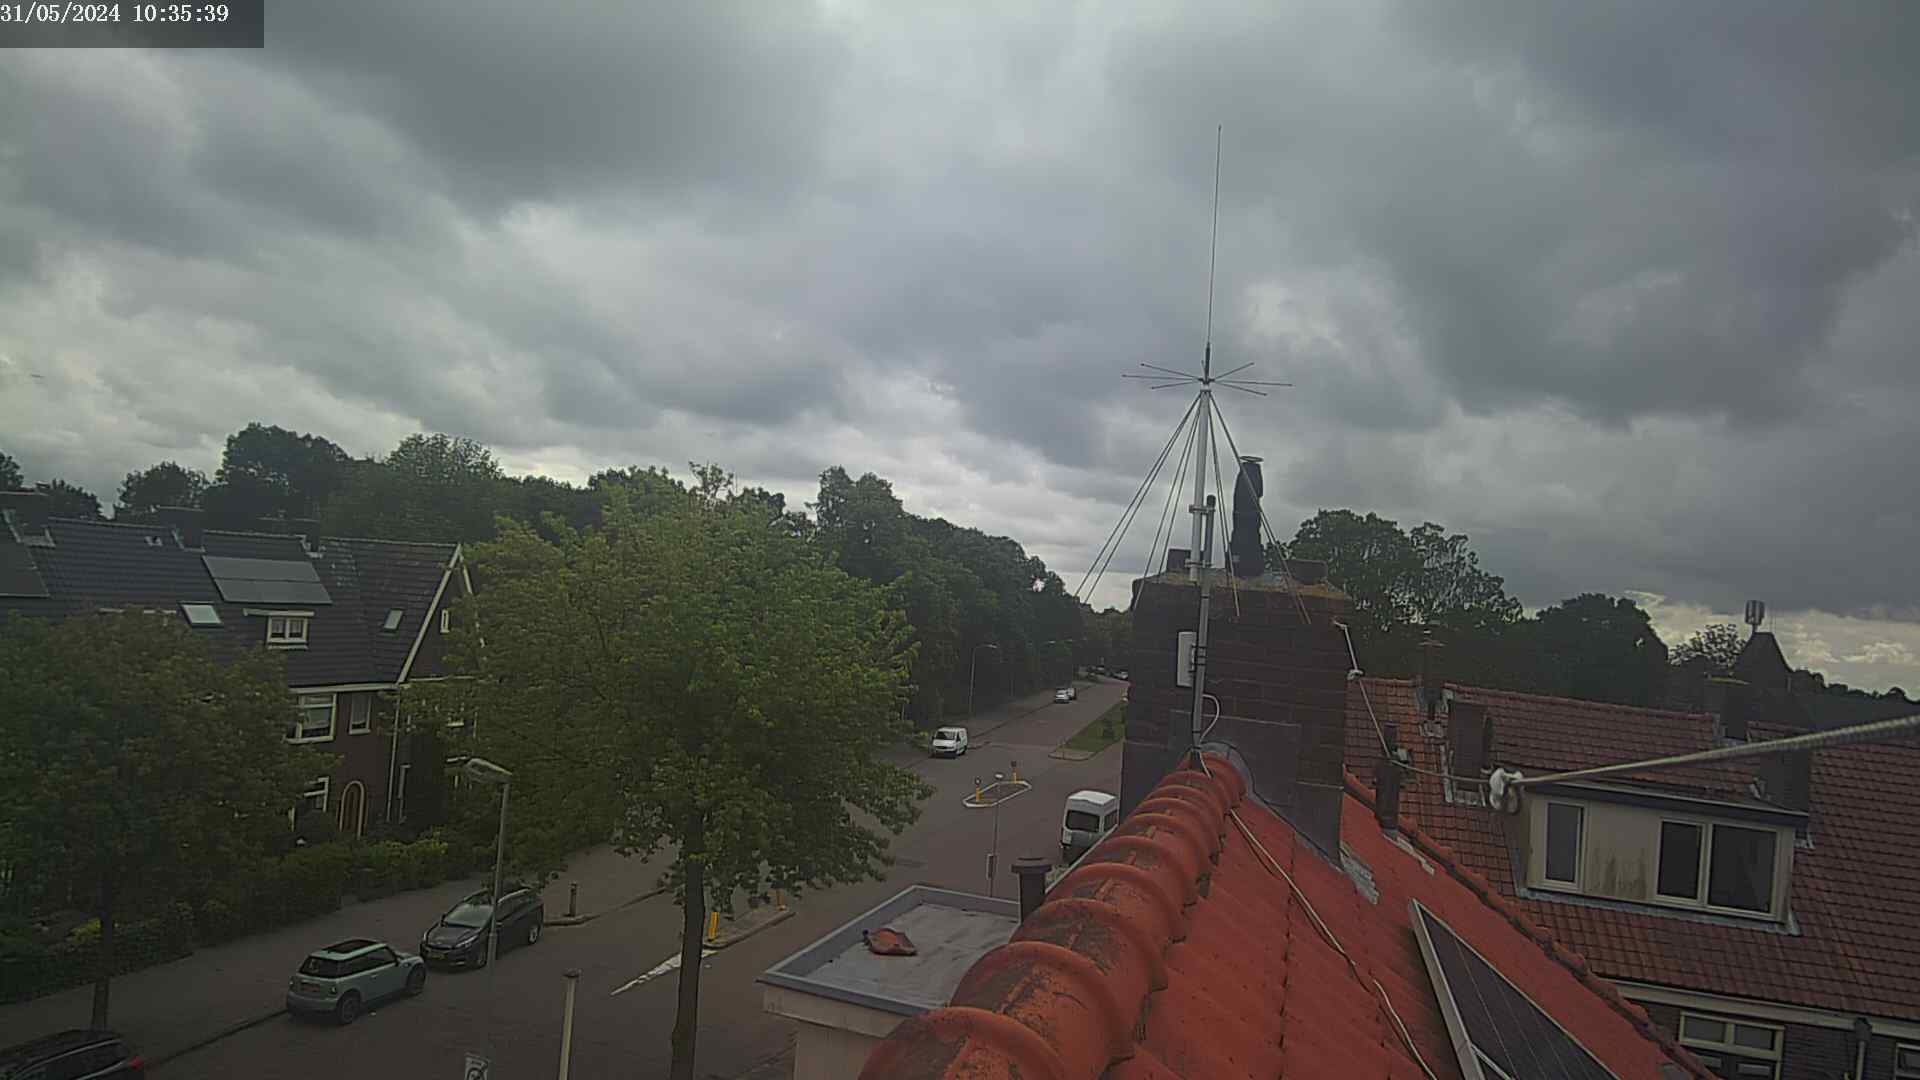 Haarlem Gio. 11:35